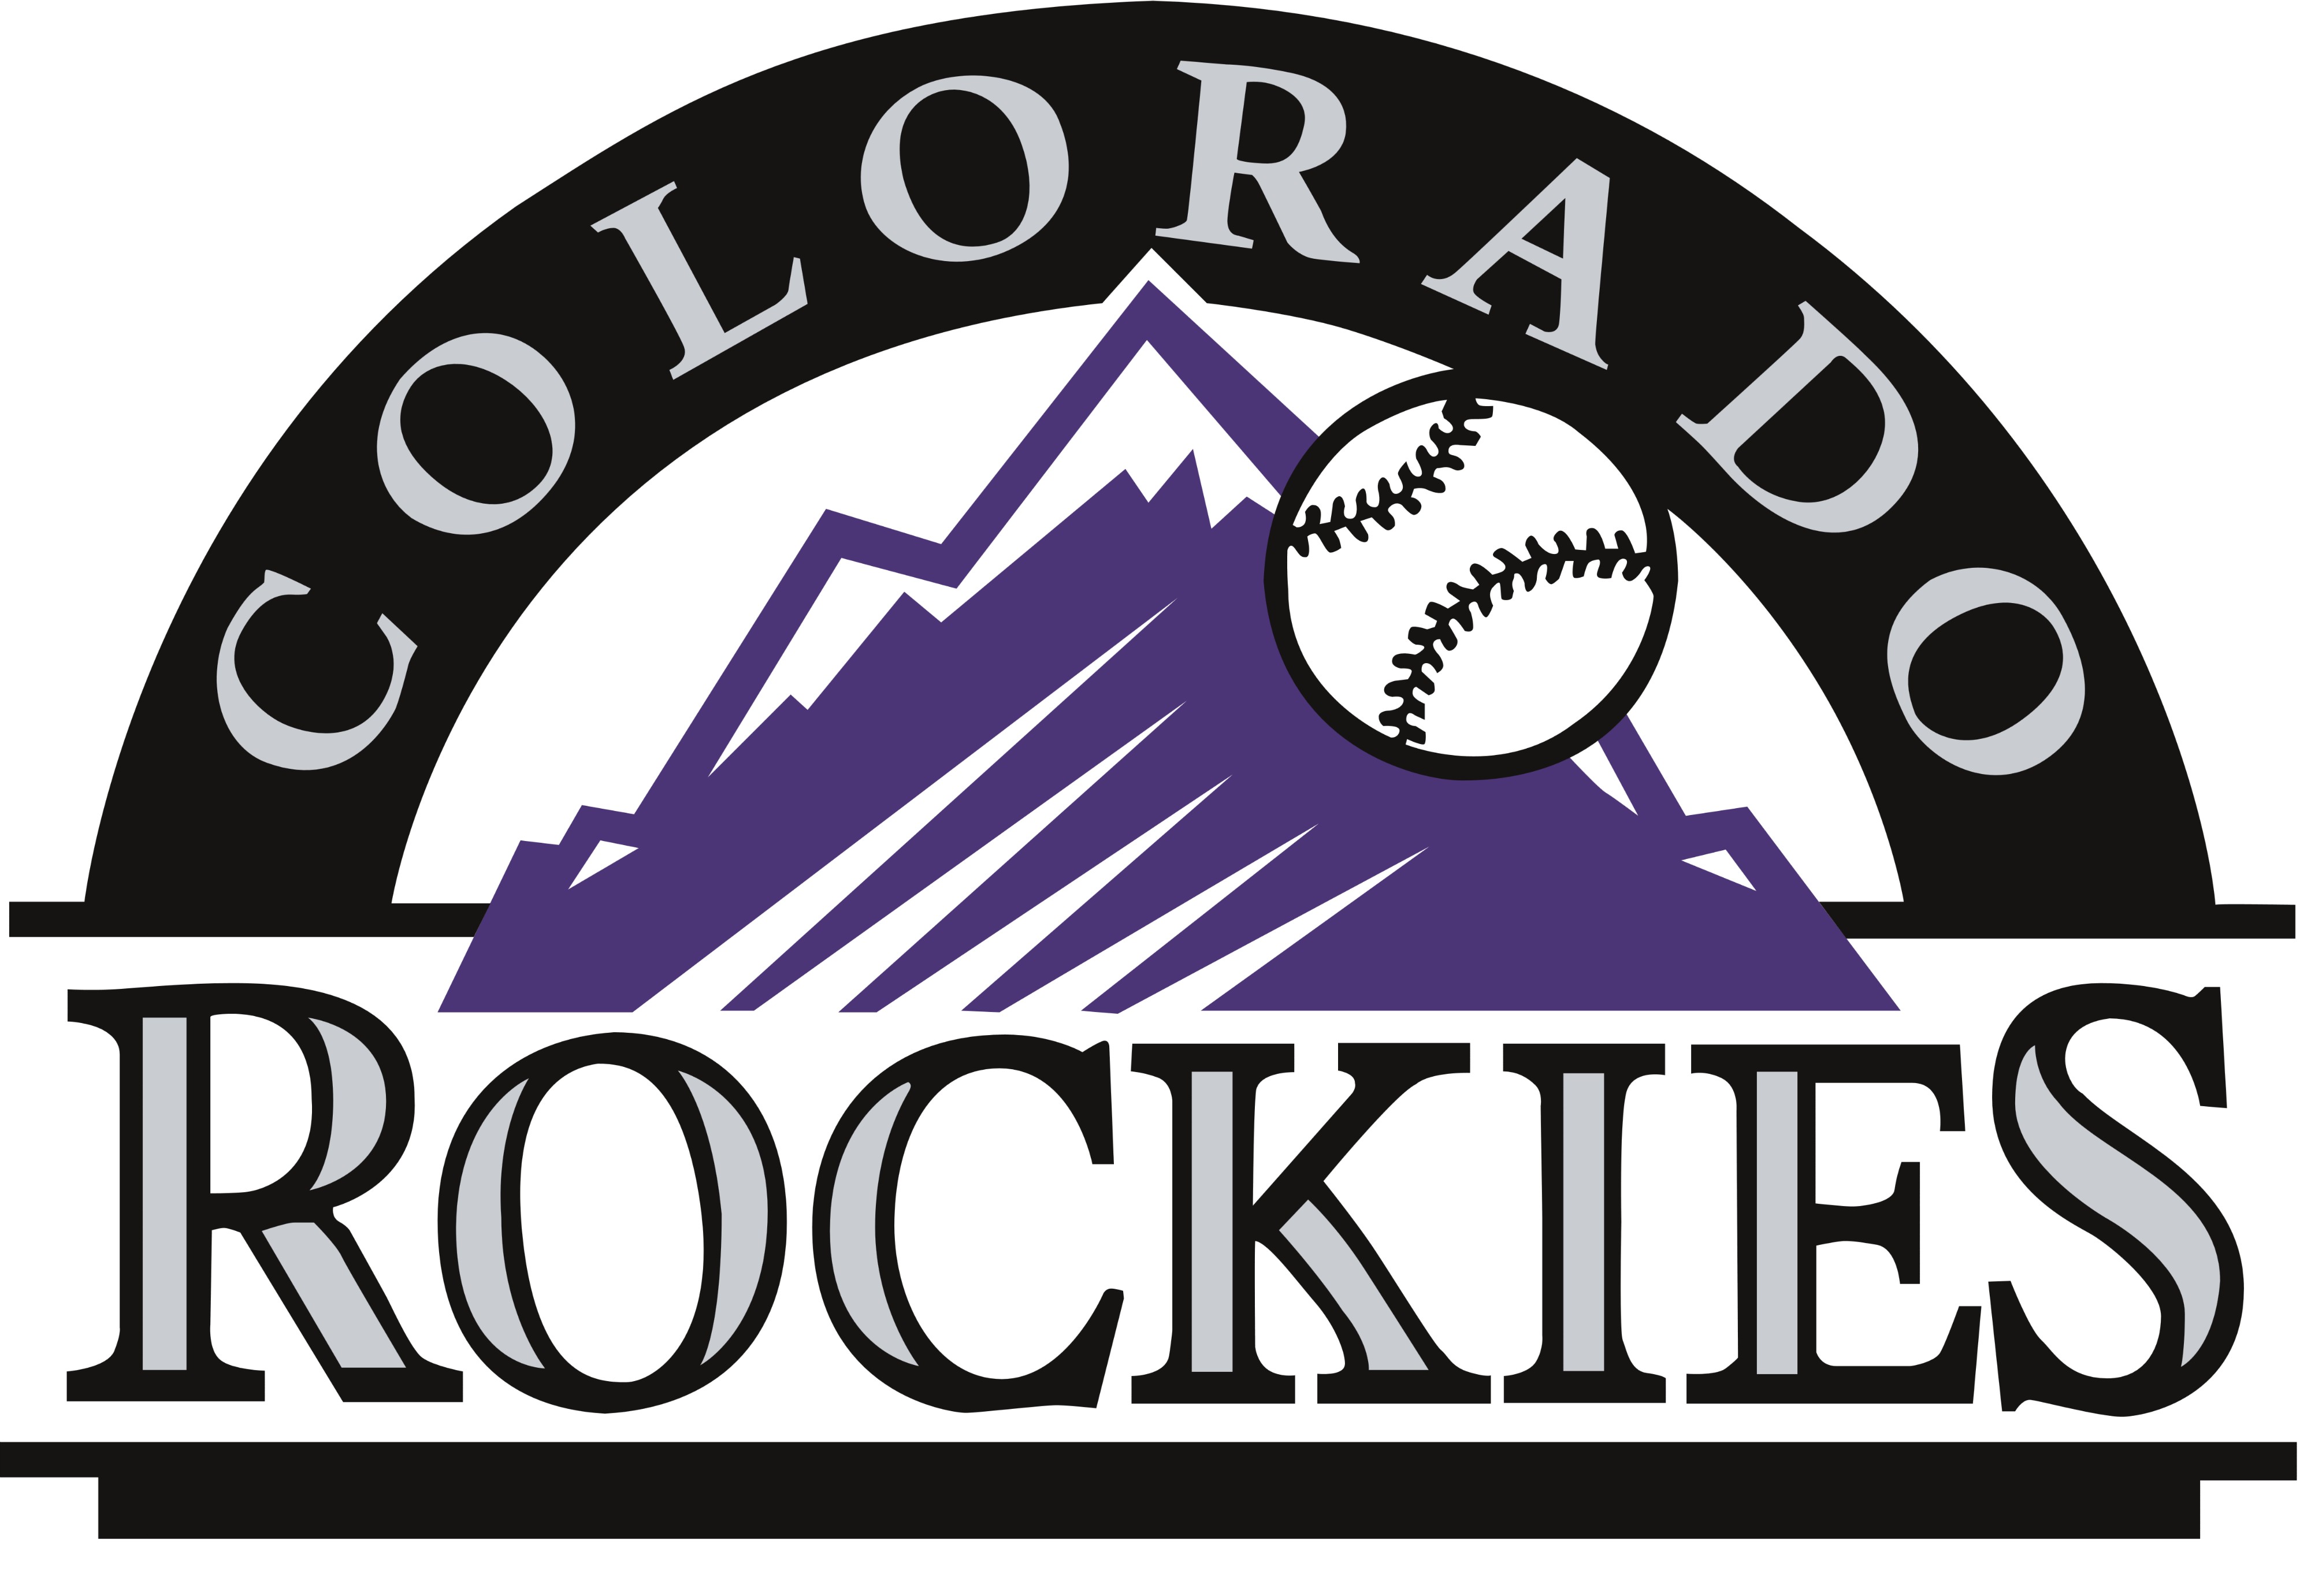 Colorado Rockies, Major League Baseball, Logotype